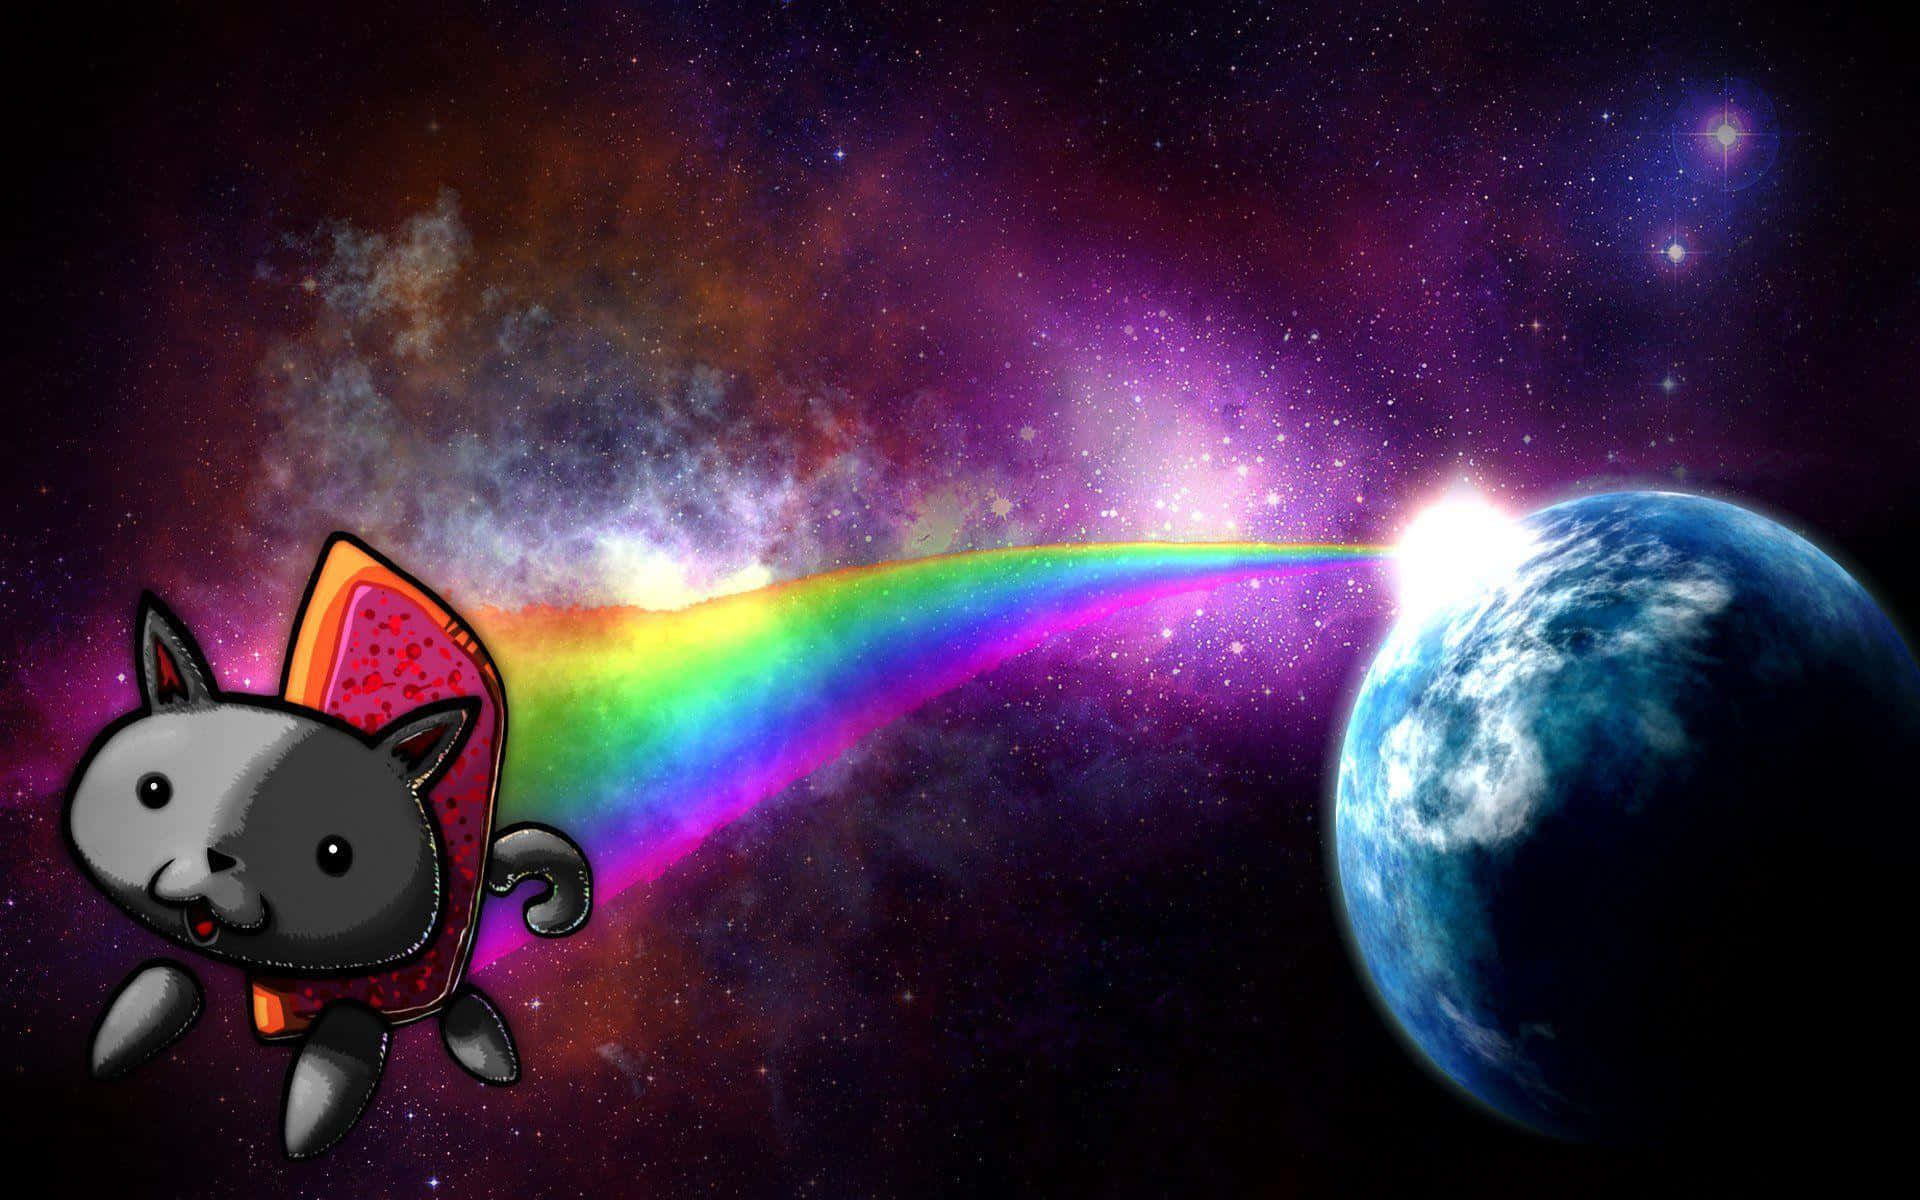 Nyan Cat flying through a pixelated universe